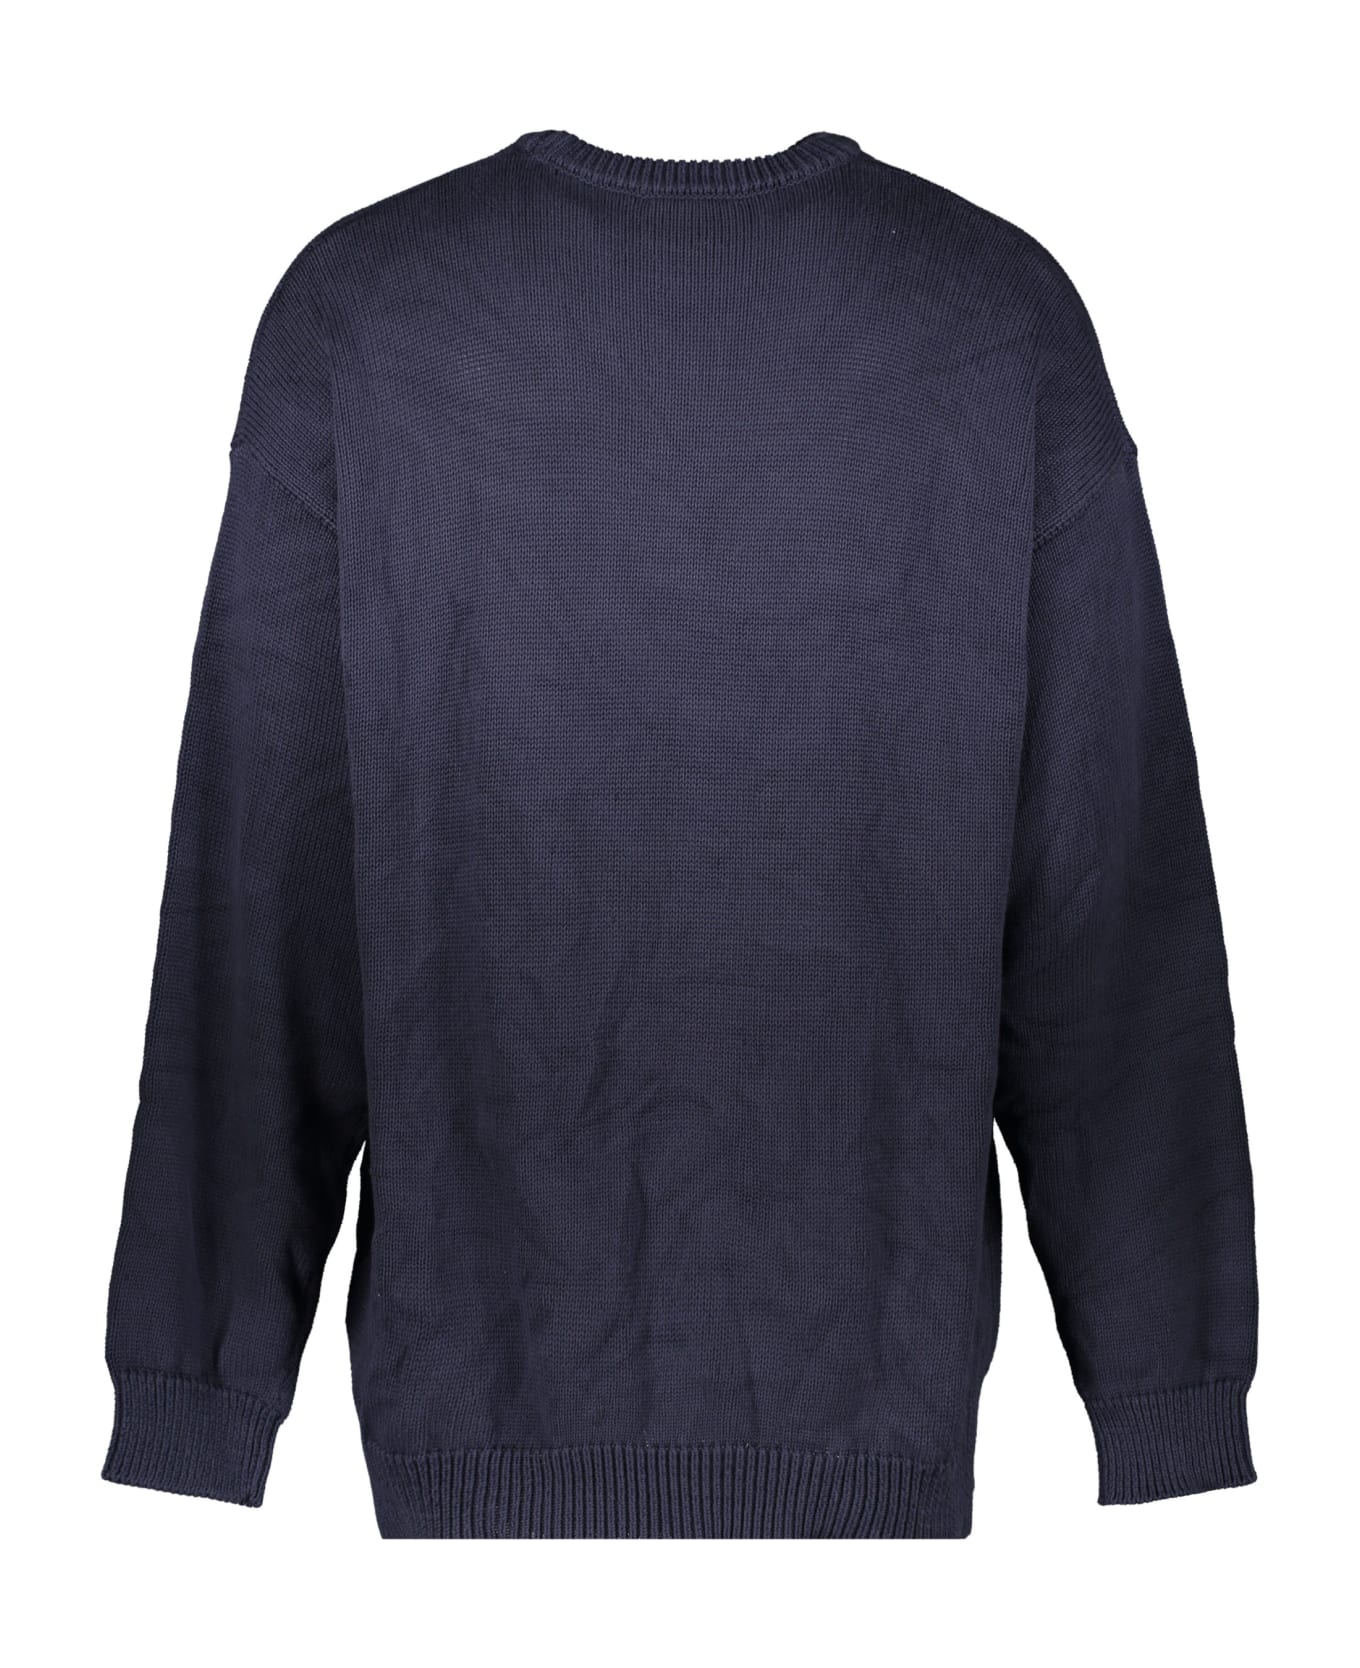 Balenciaga Logo Crew-neck Sweater - blue ニットウェア